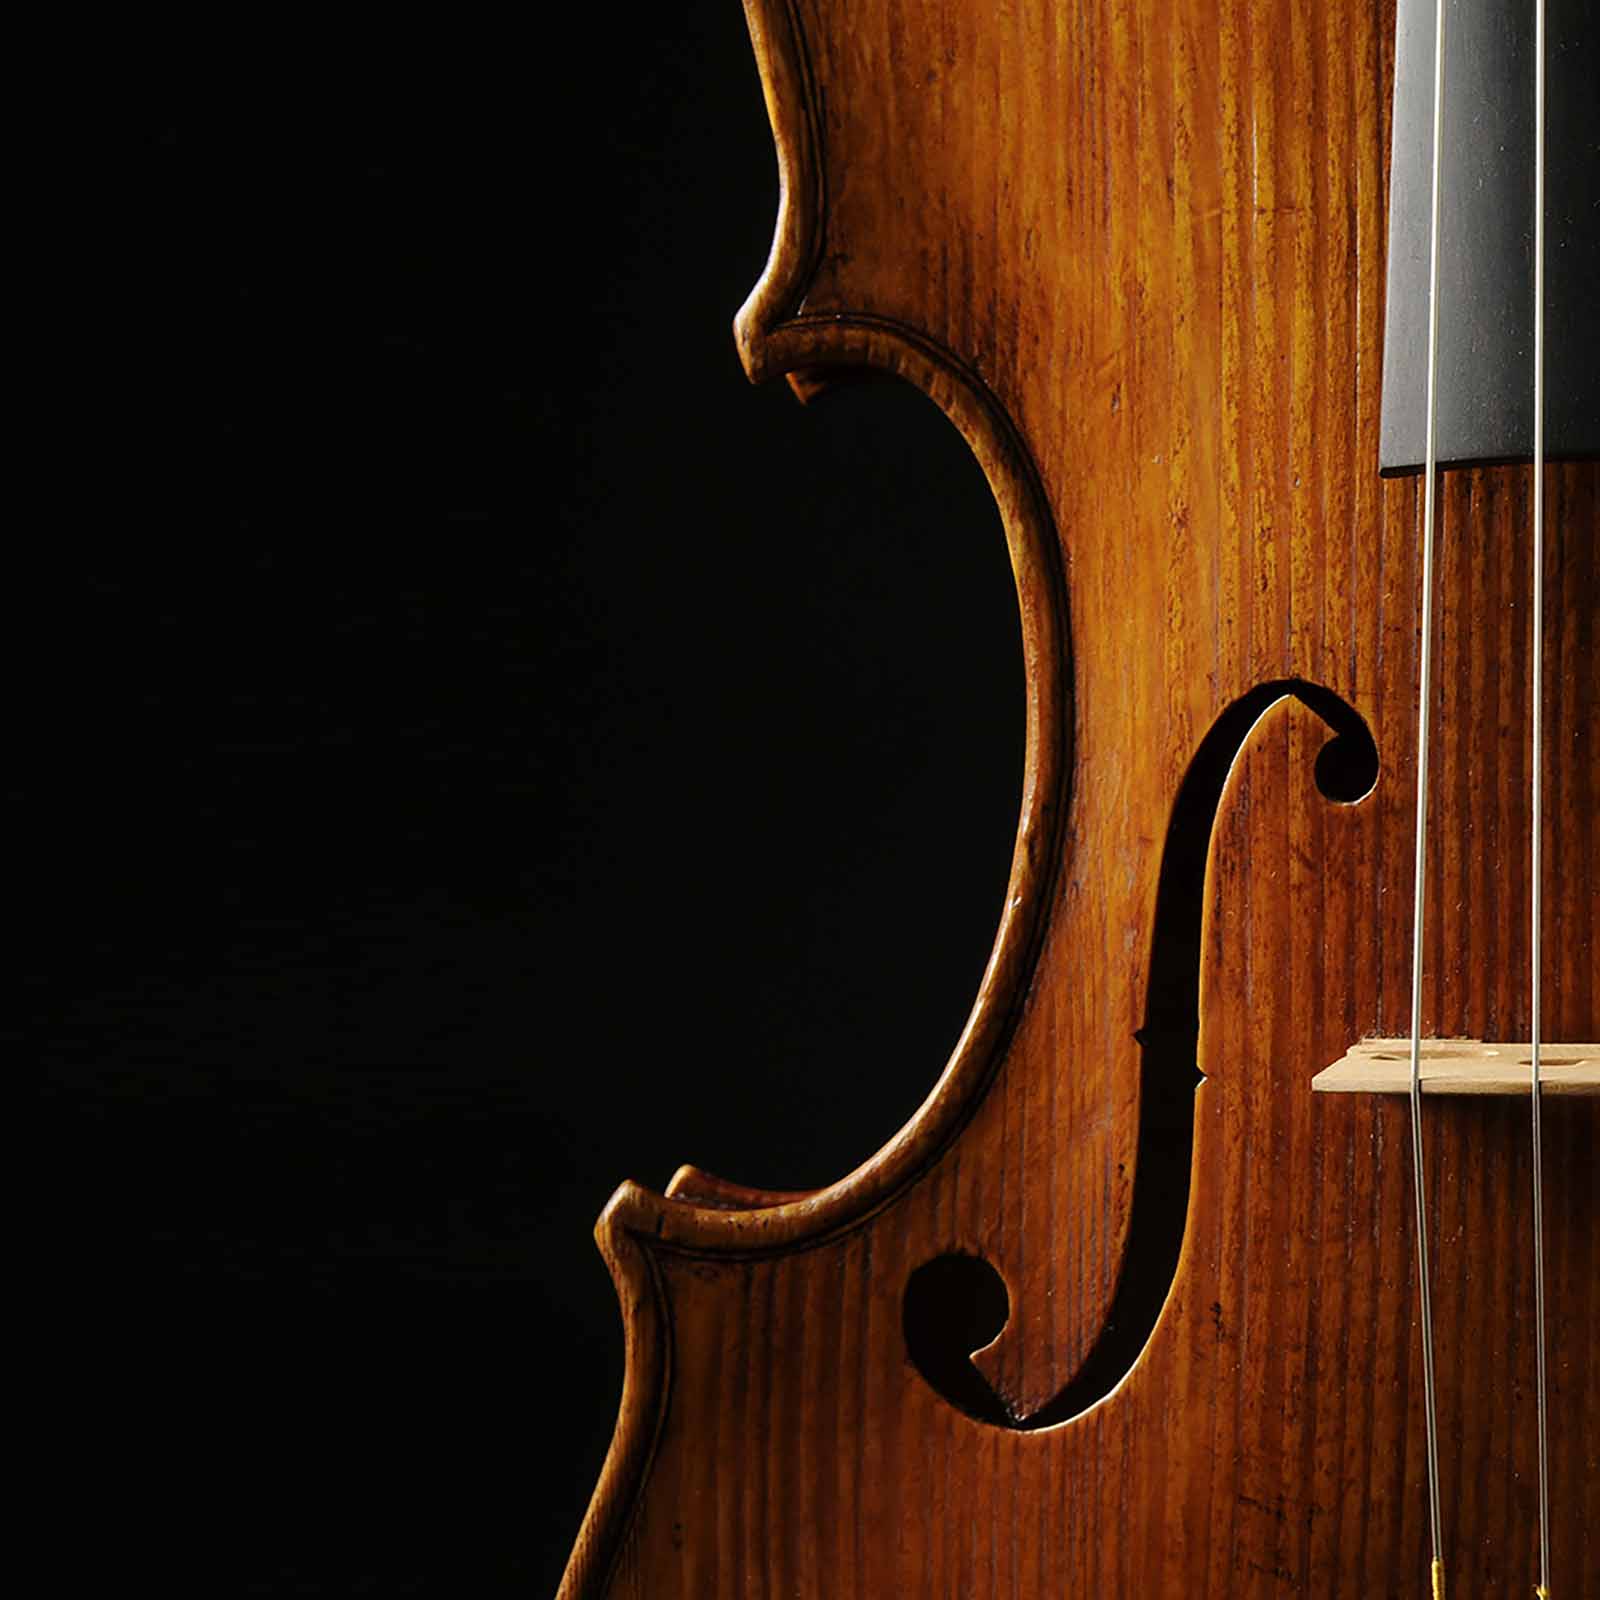 Antonio Stradivari Cremona 1672 “Gustav“ cm 42 - Image 6